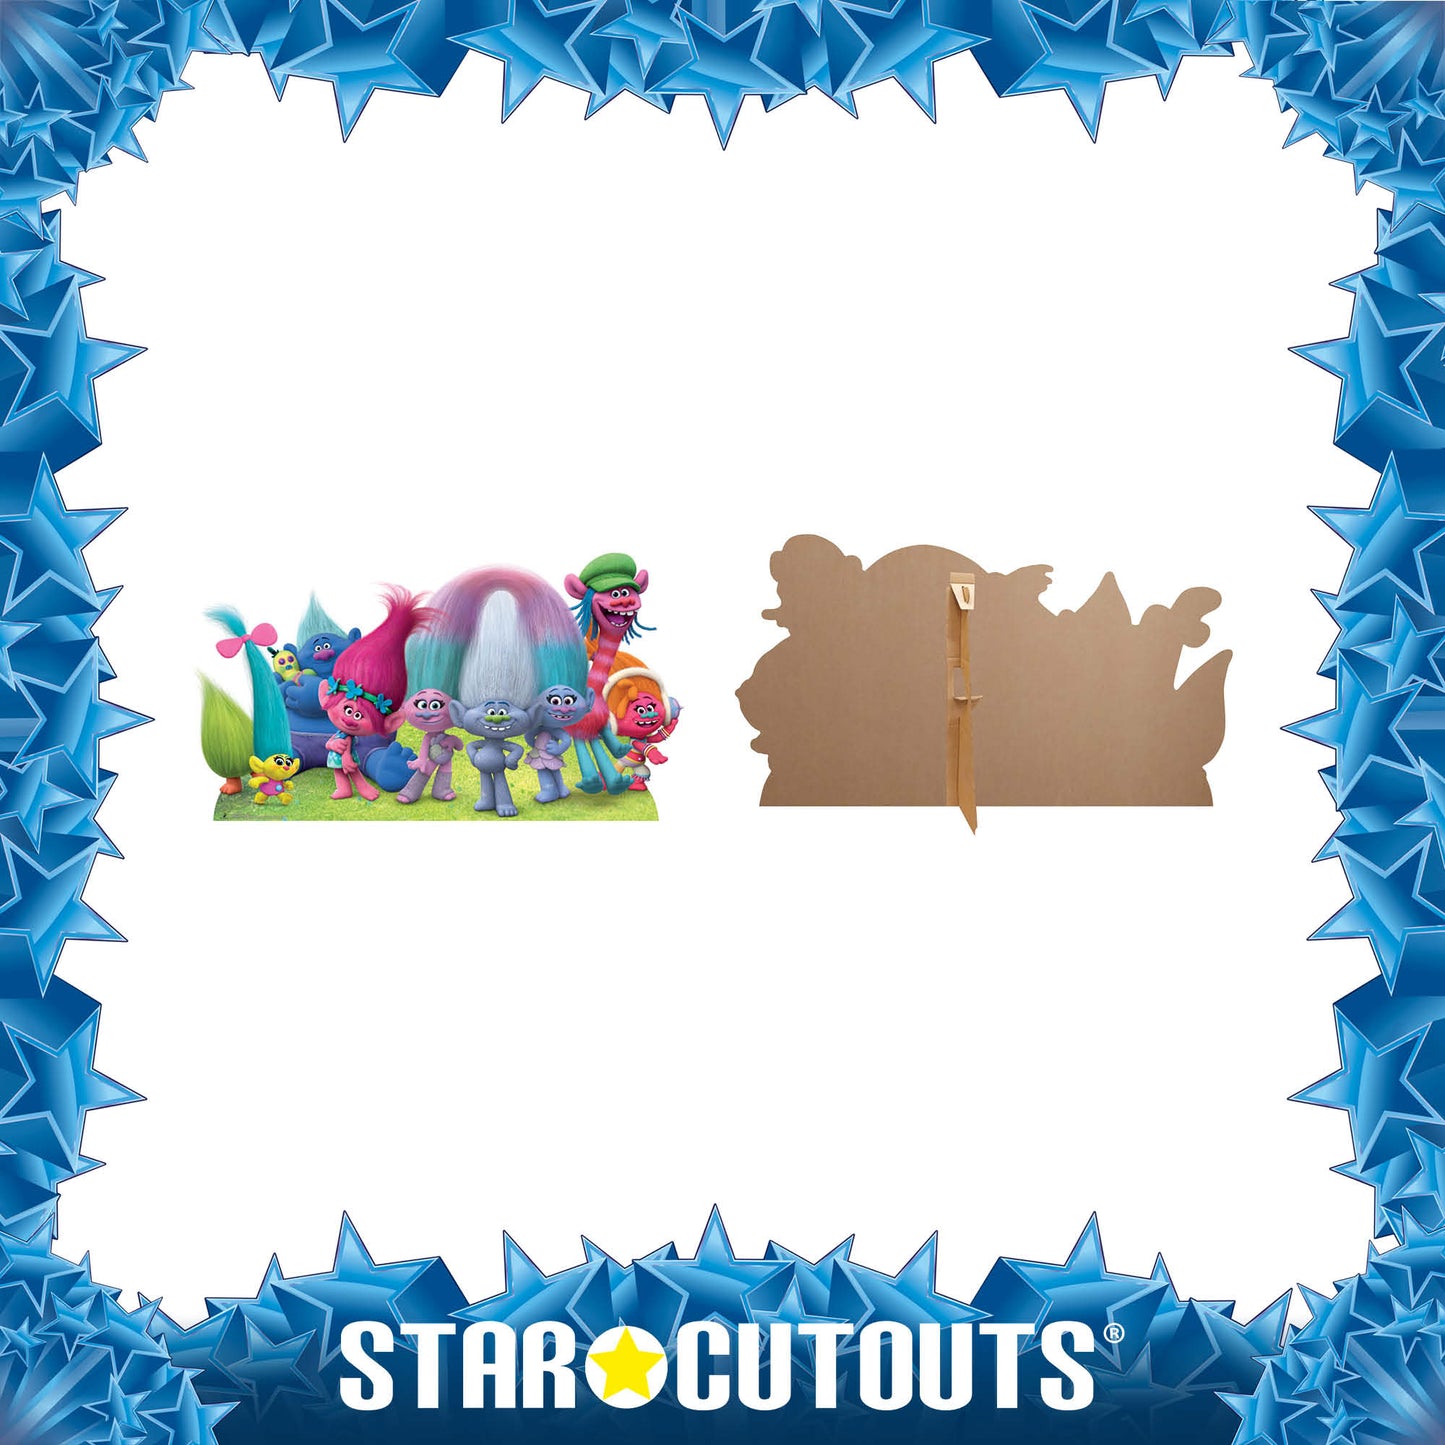 Trolls True Colours Group Cutout Cardboard Cutout